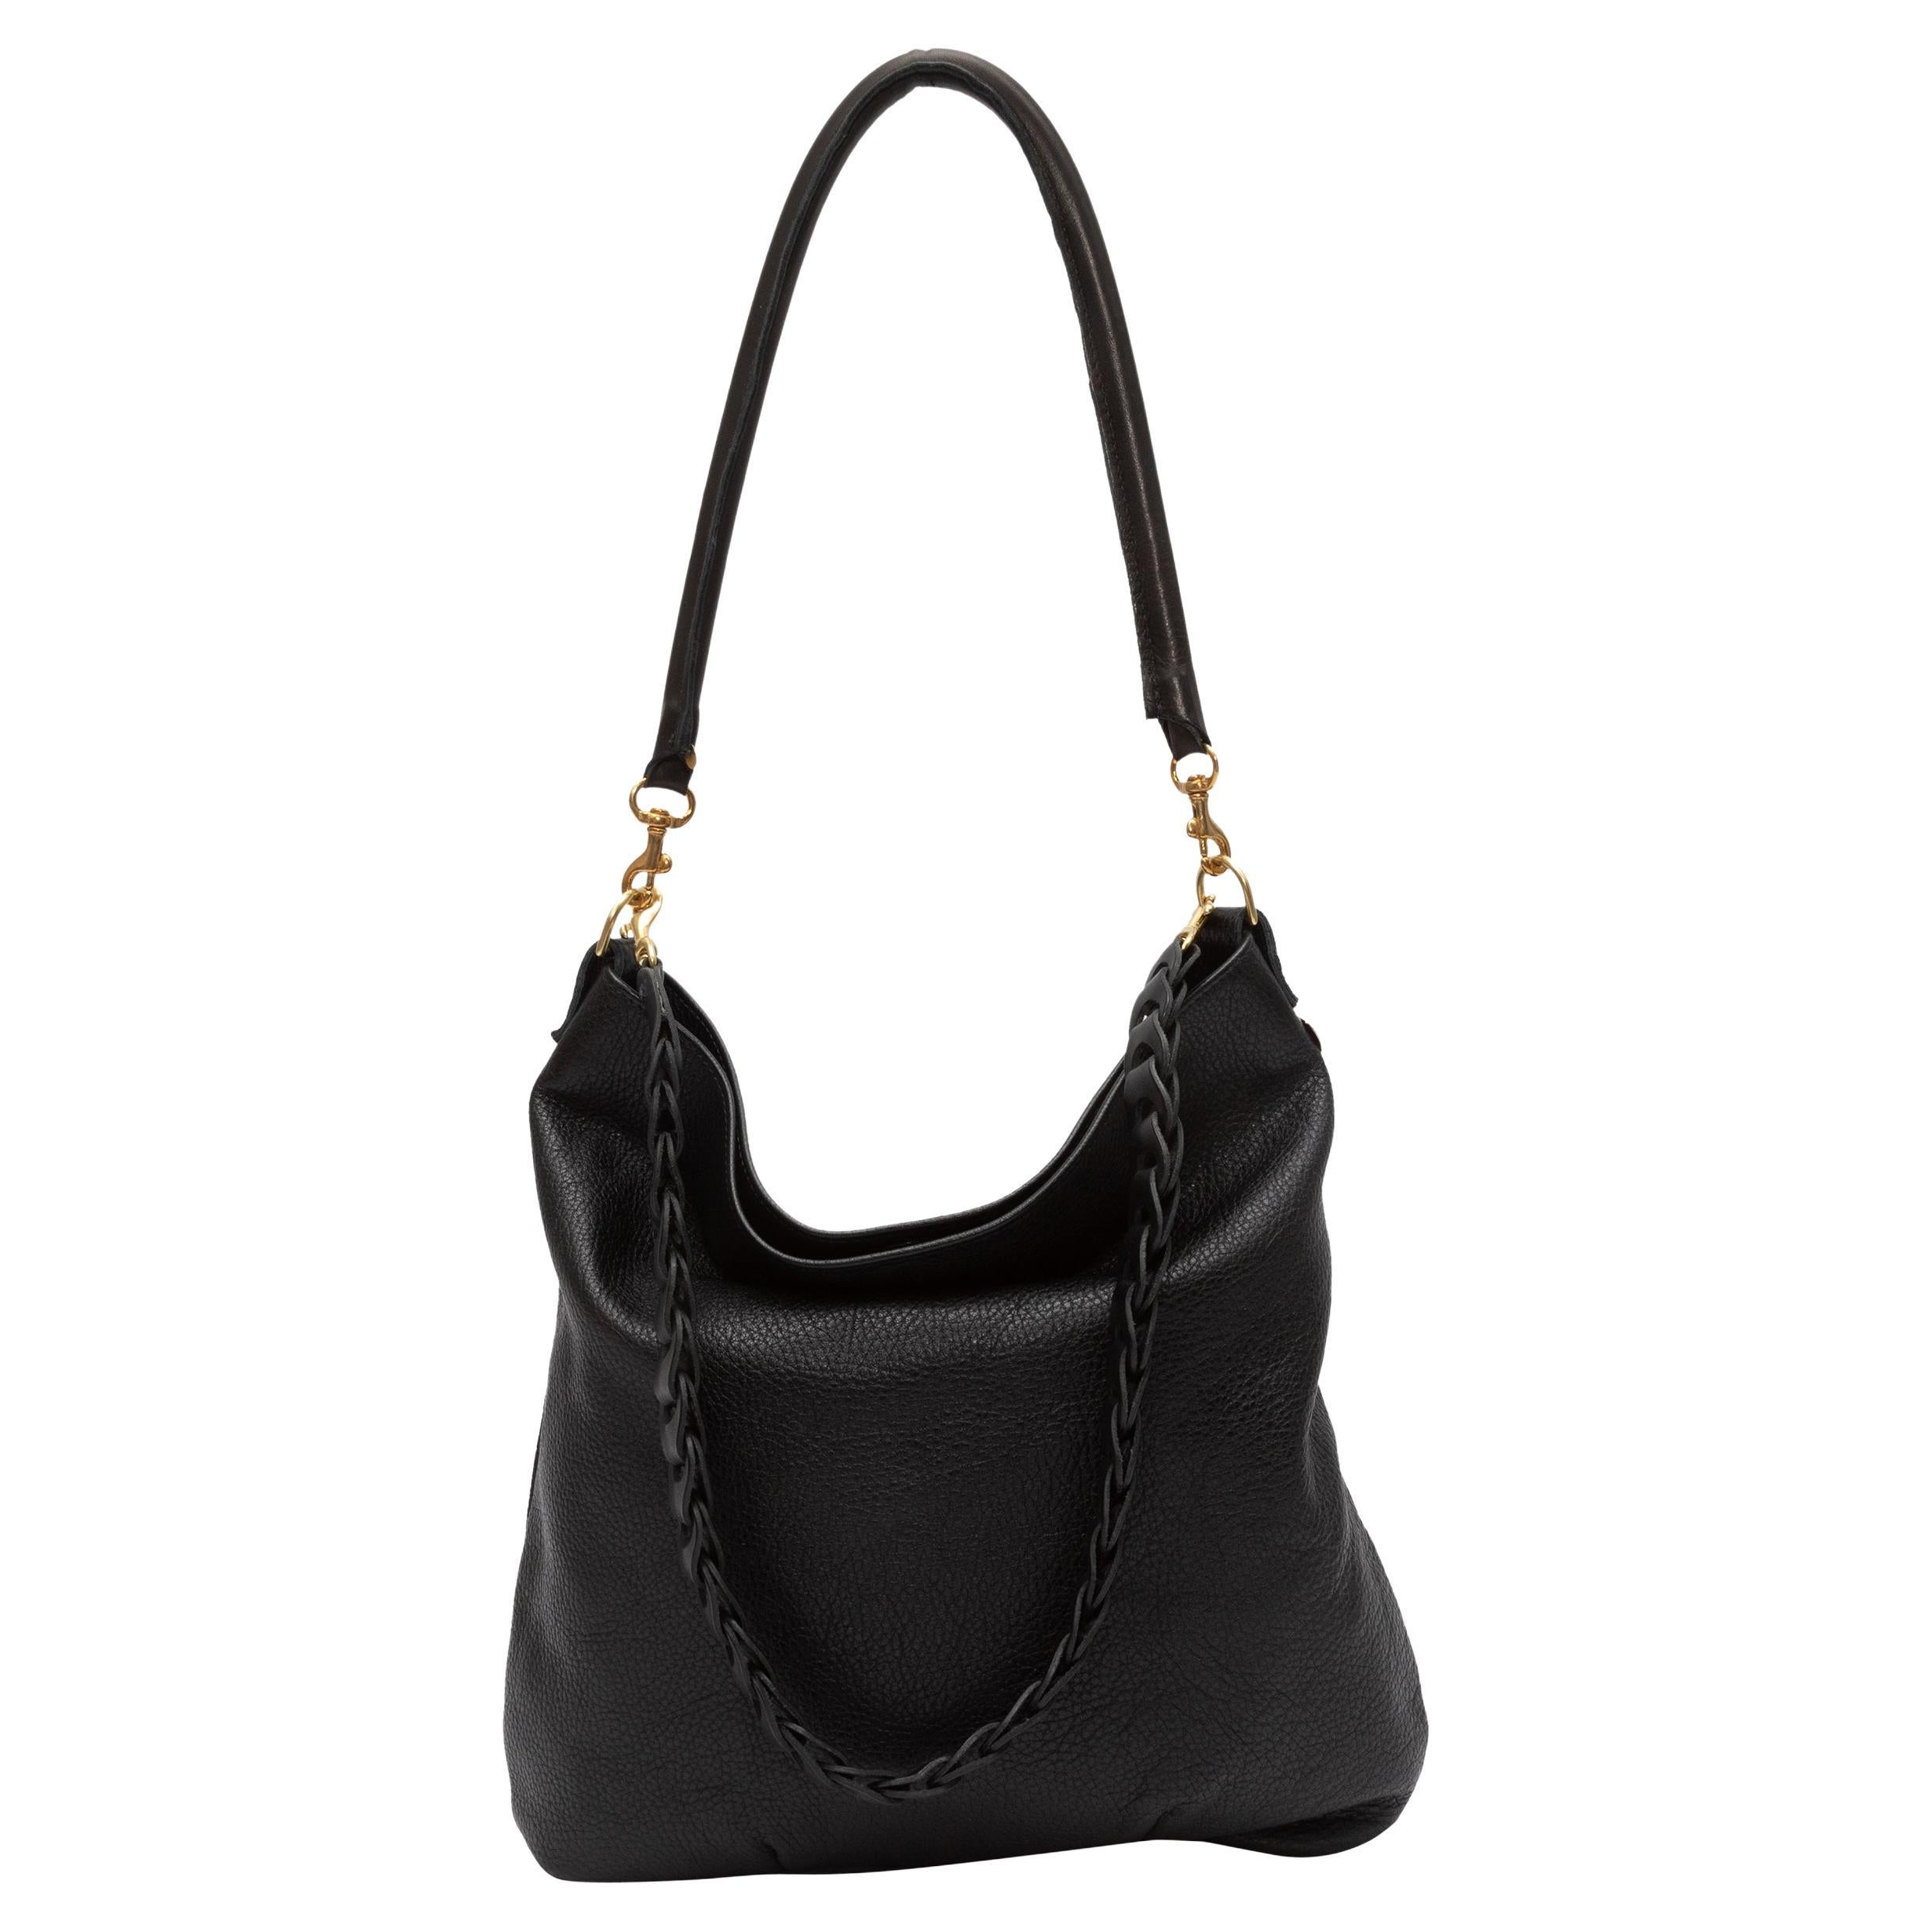 Clare V. Black Leather Hobo Bag